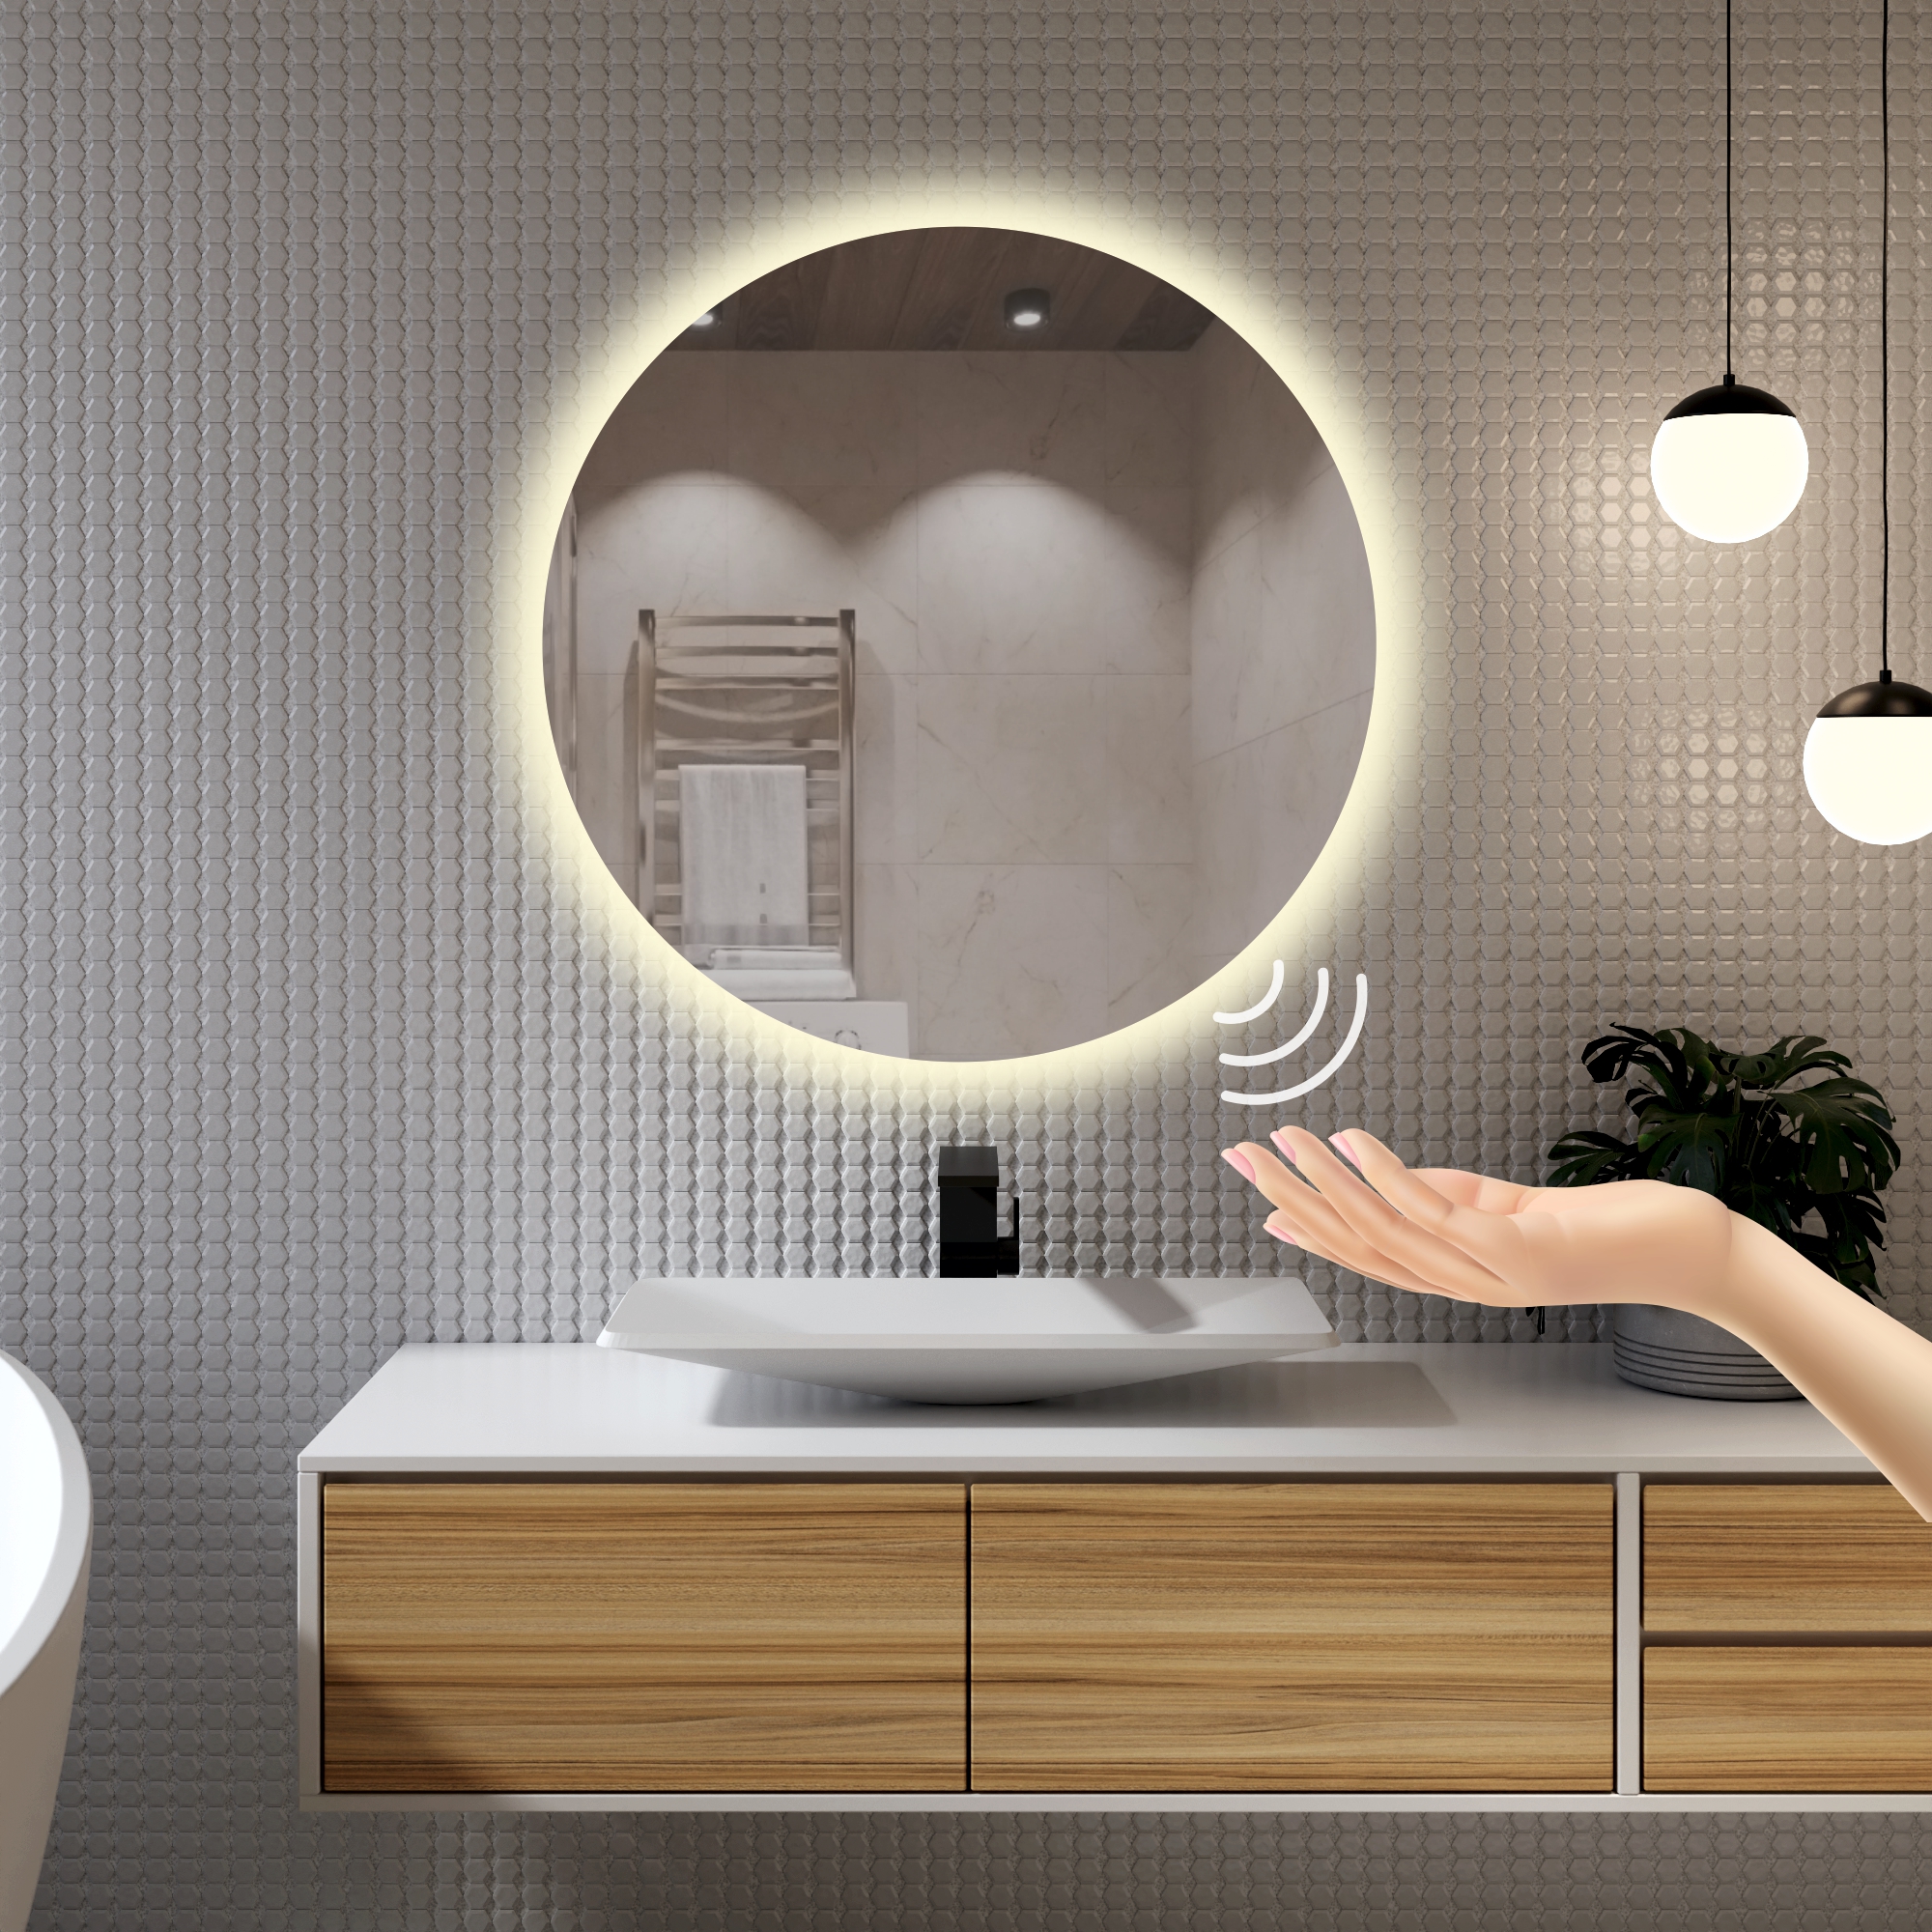 Зеркало для ванной Alfa Mirrors с дневной подсветкой 4200К круглое 60см, арт. Na-6Vzd круглое зеркало мертвой зоны airline